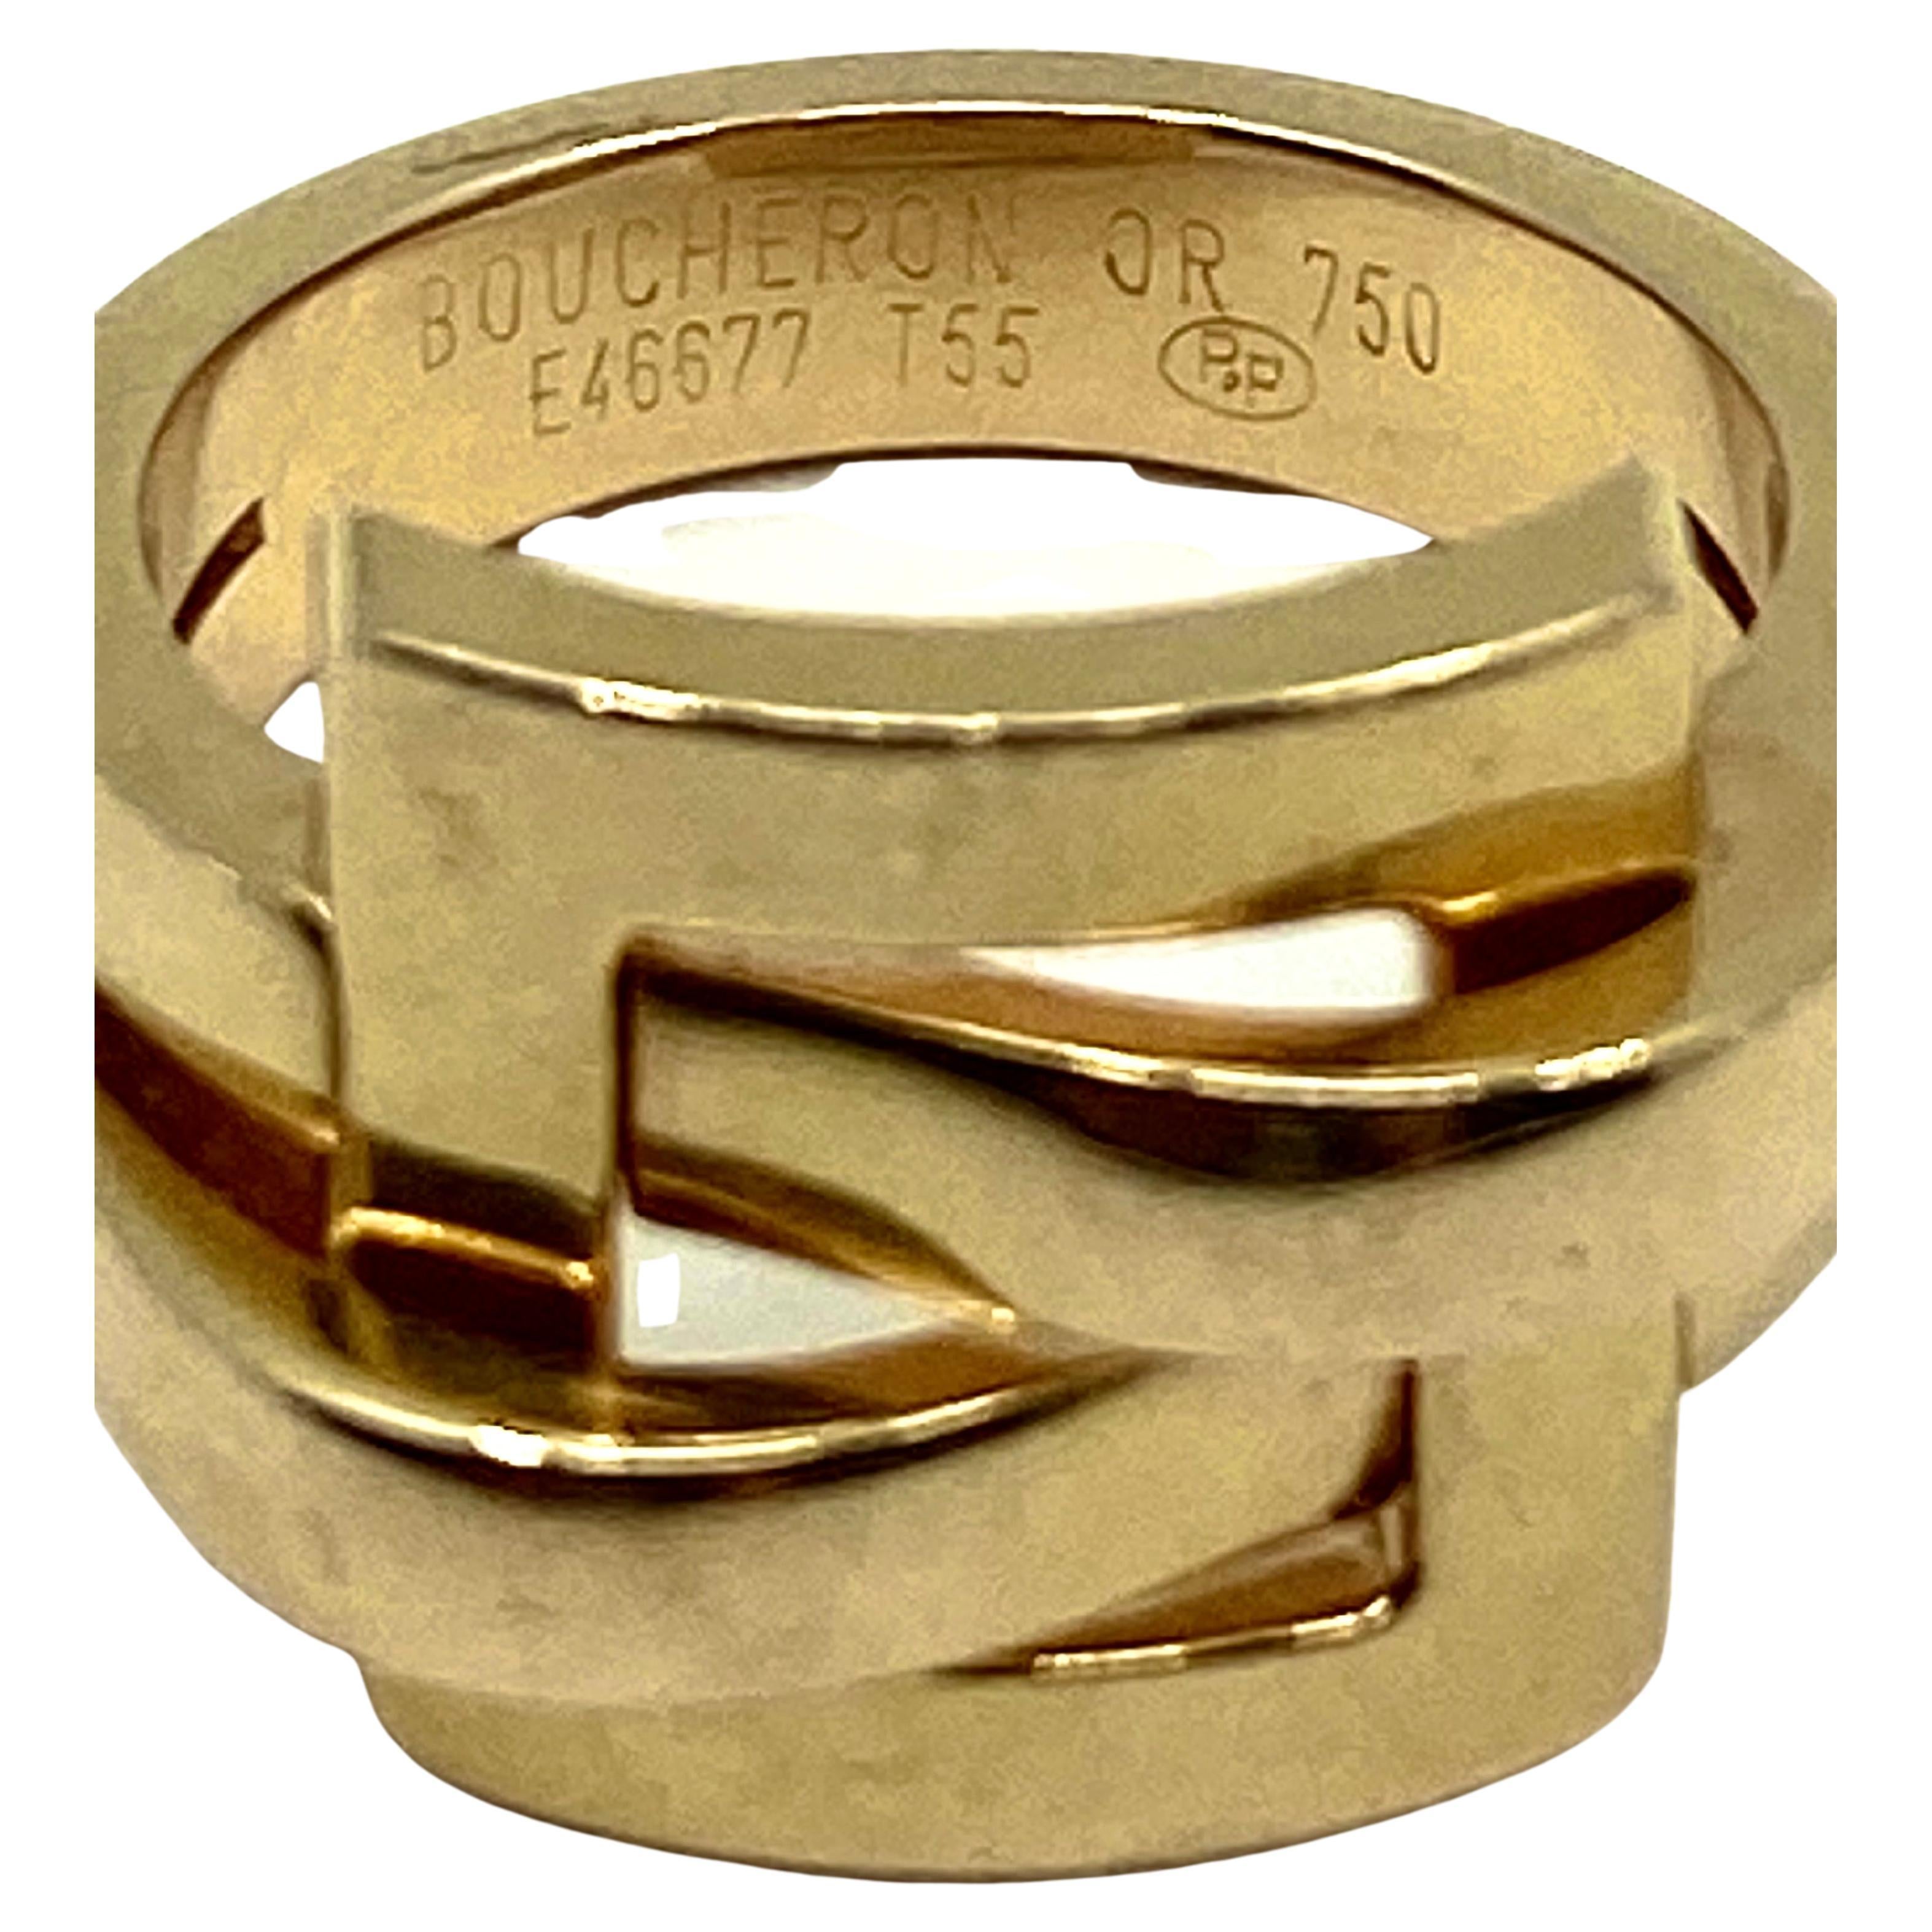 Boucheron Buckle Ring Vintage 18k Gold 6